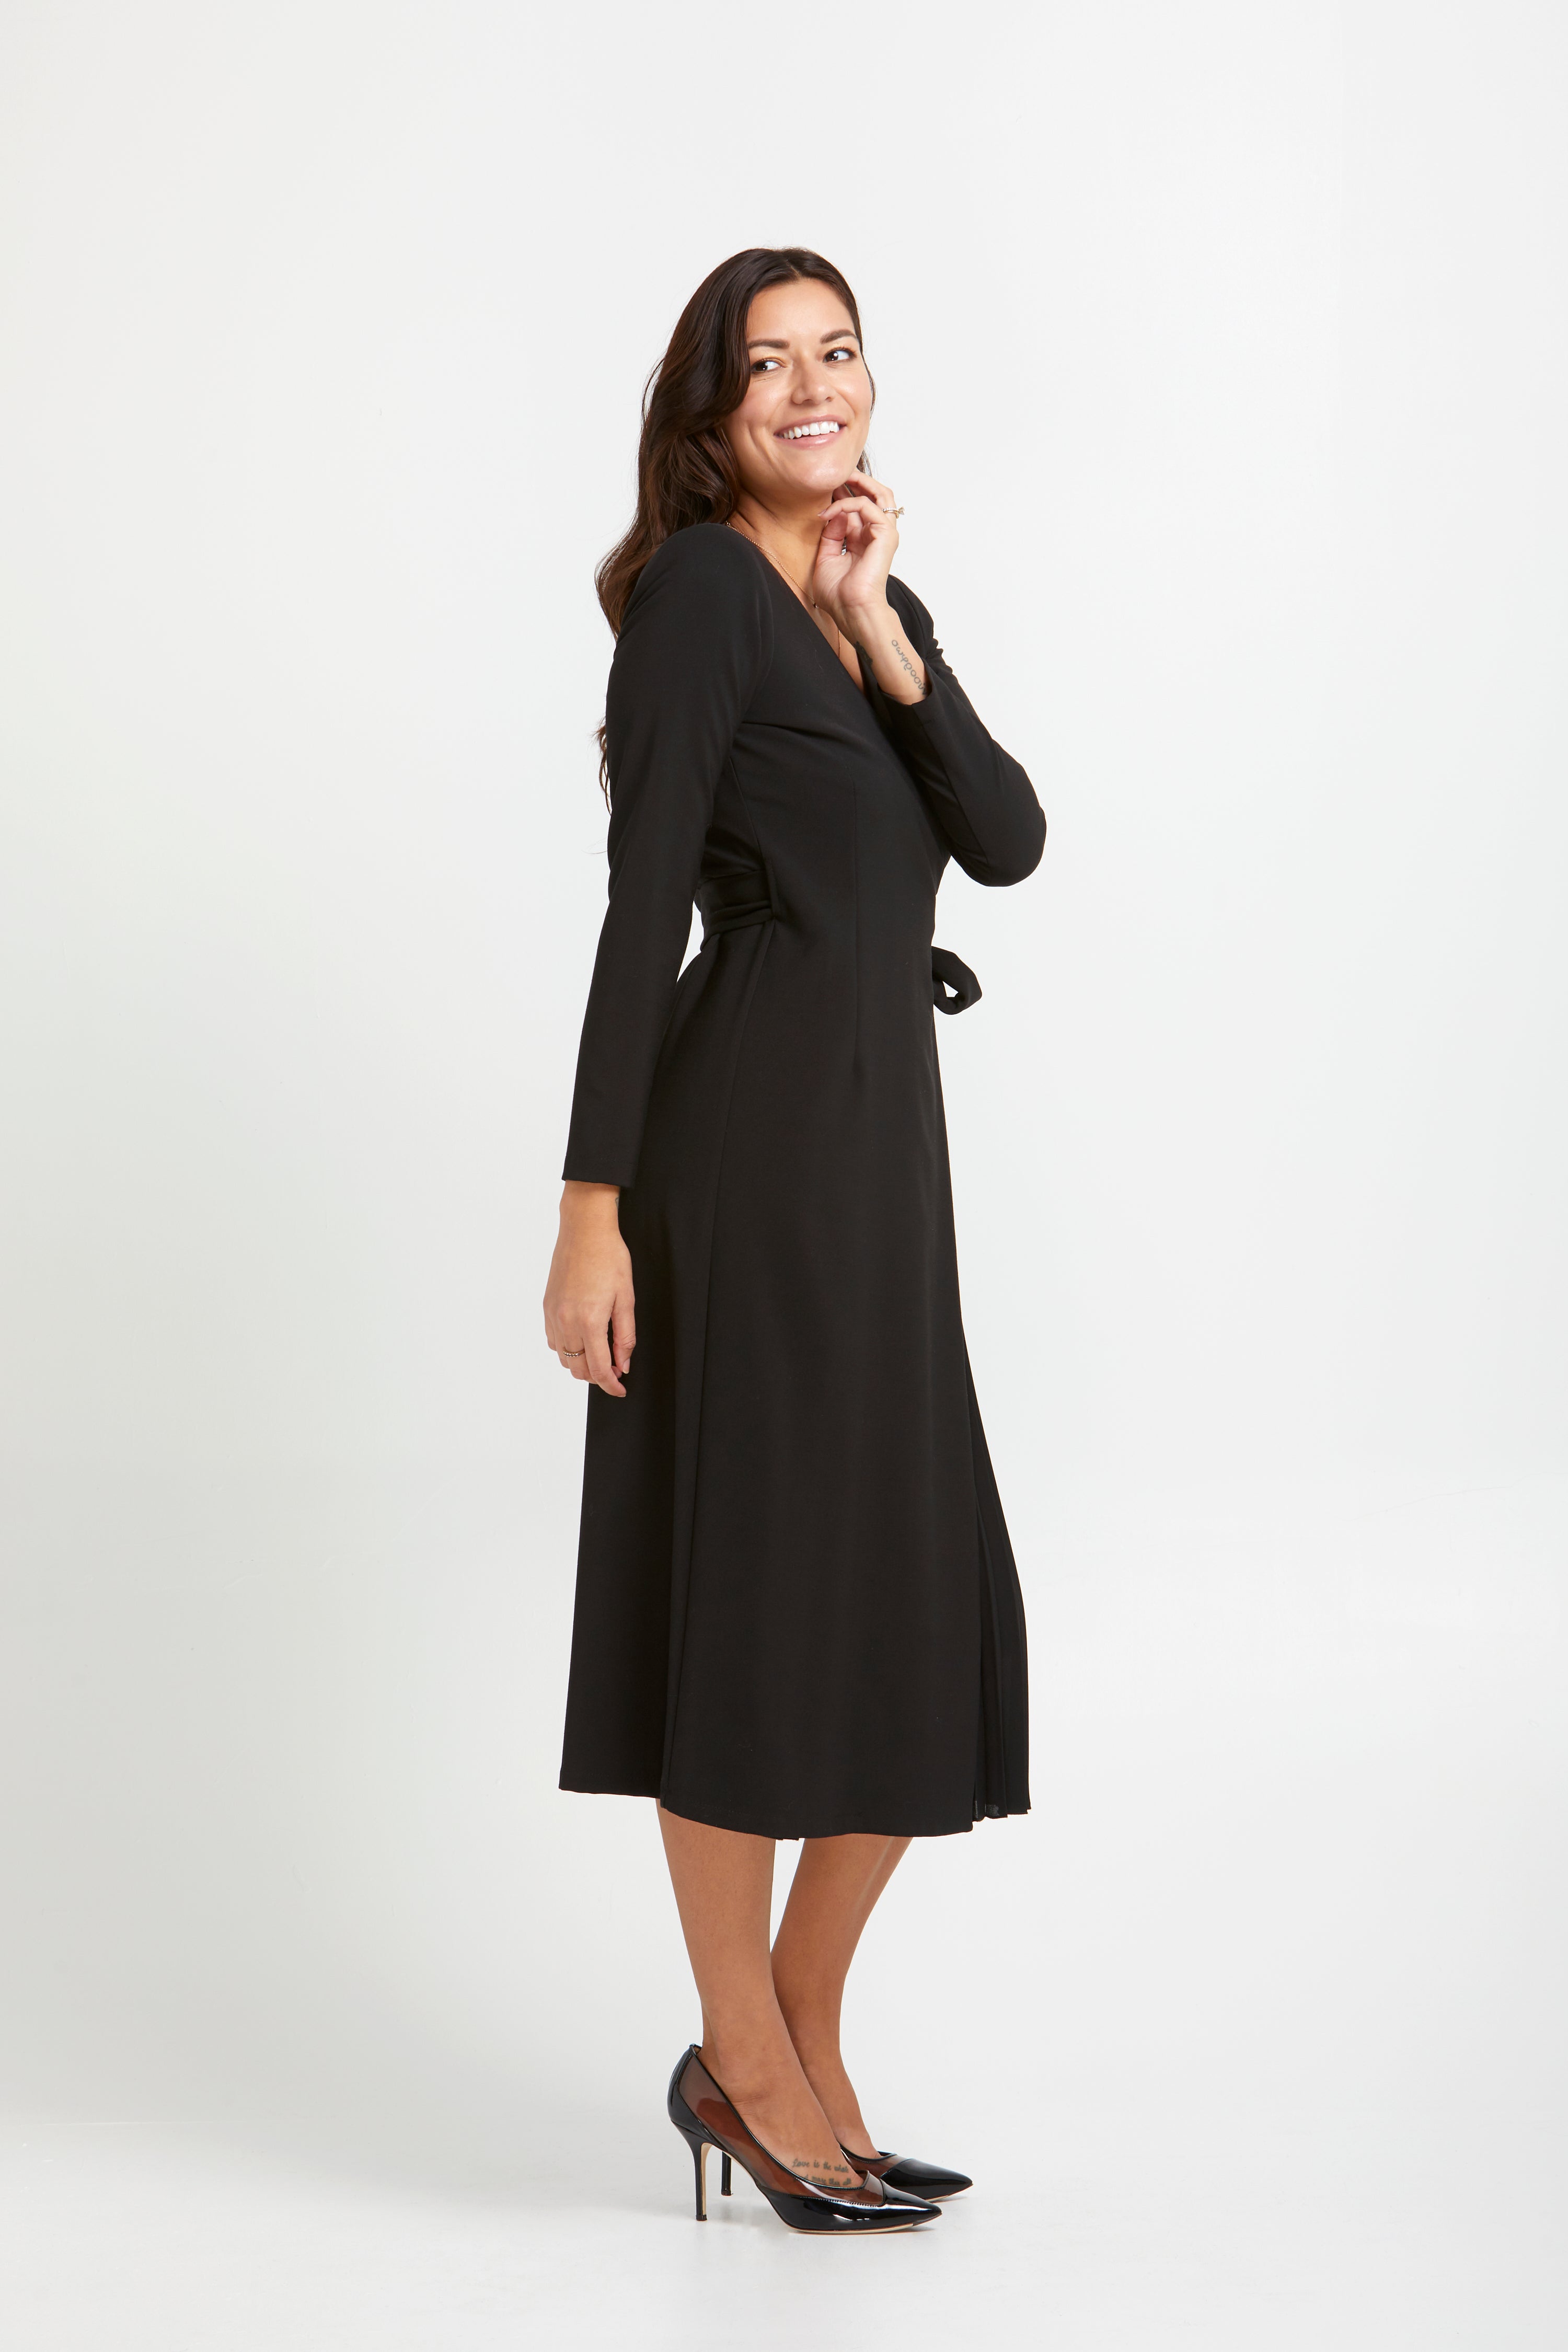 Cristina Gavioli Sofia Black Pleated Long Sleeve Wrap Dress- Italian Women Clothing